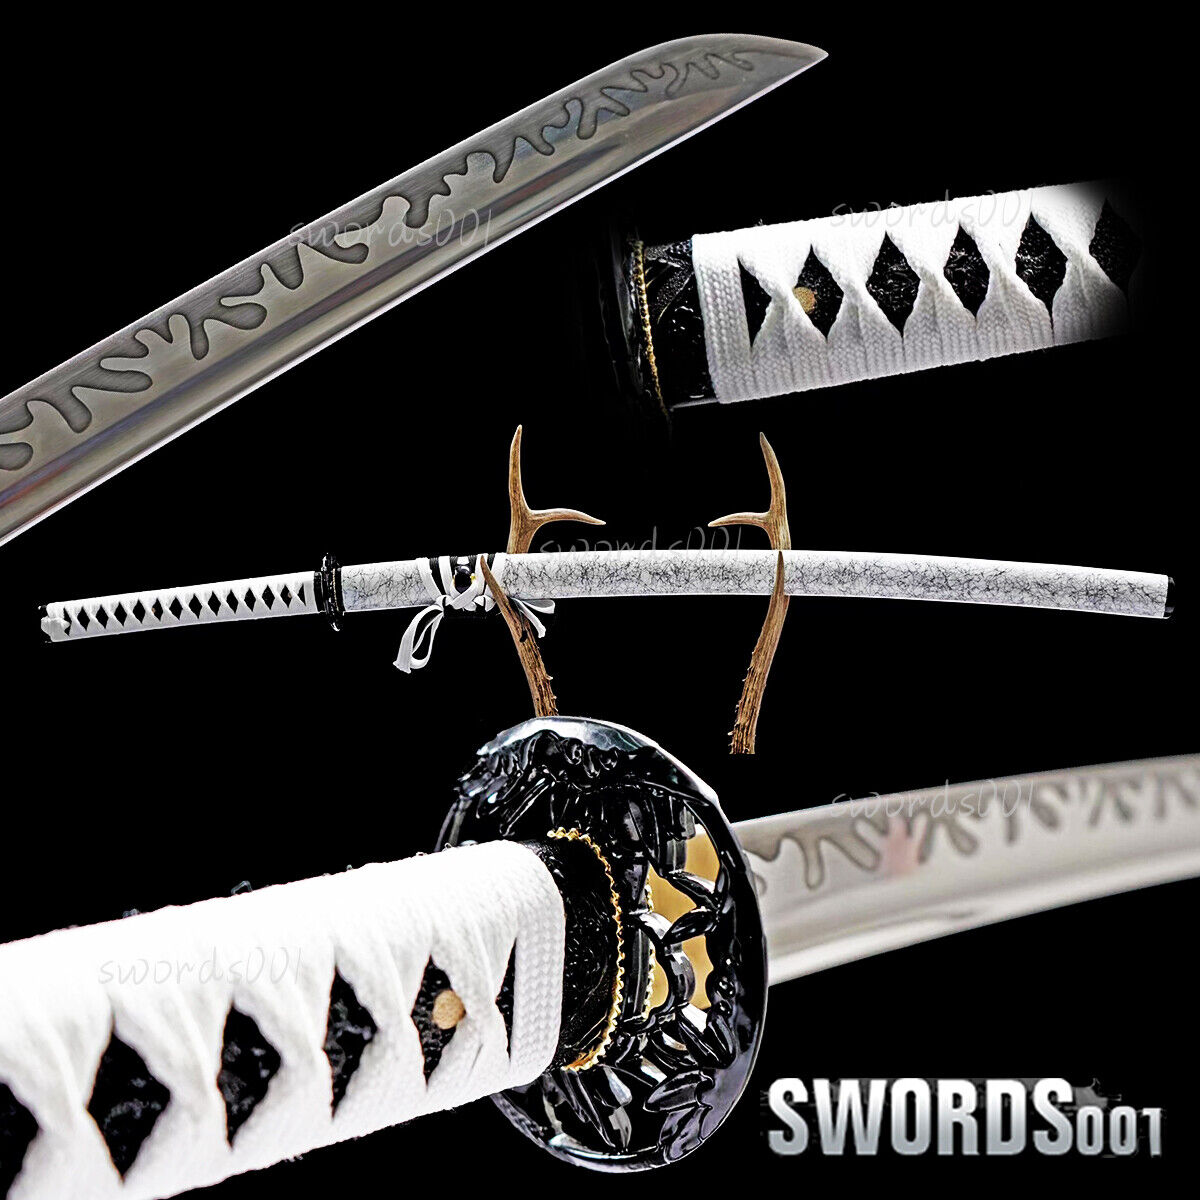 TOP Quality real hamon Japanese Samurai Katana Warrior Sword T10 carbon Steel 